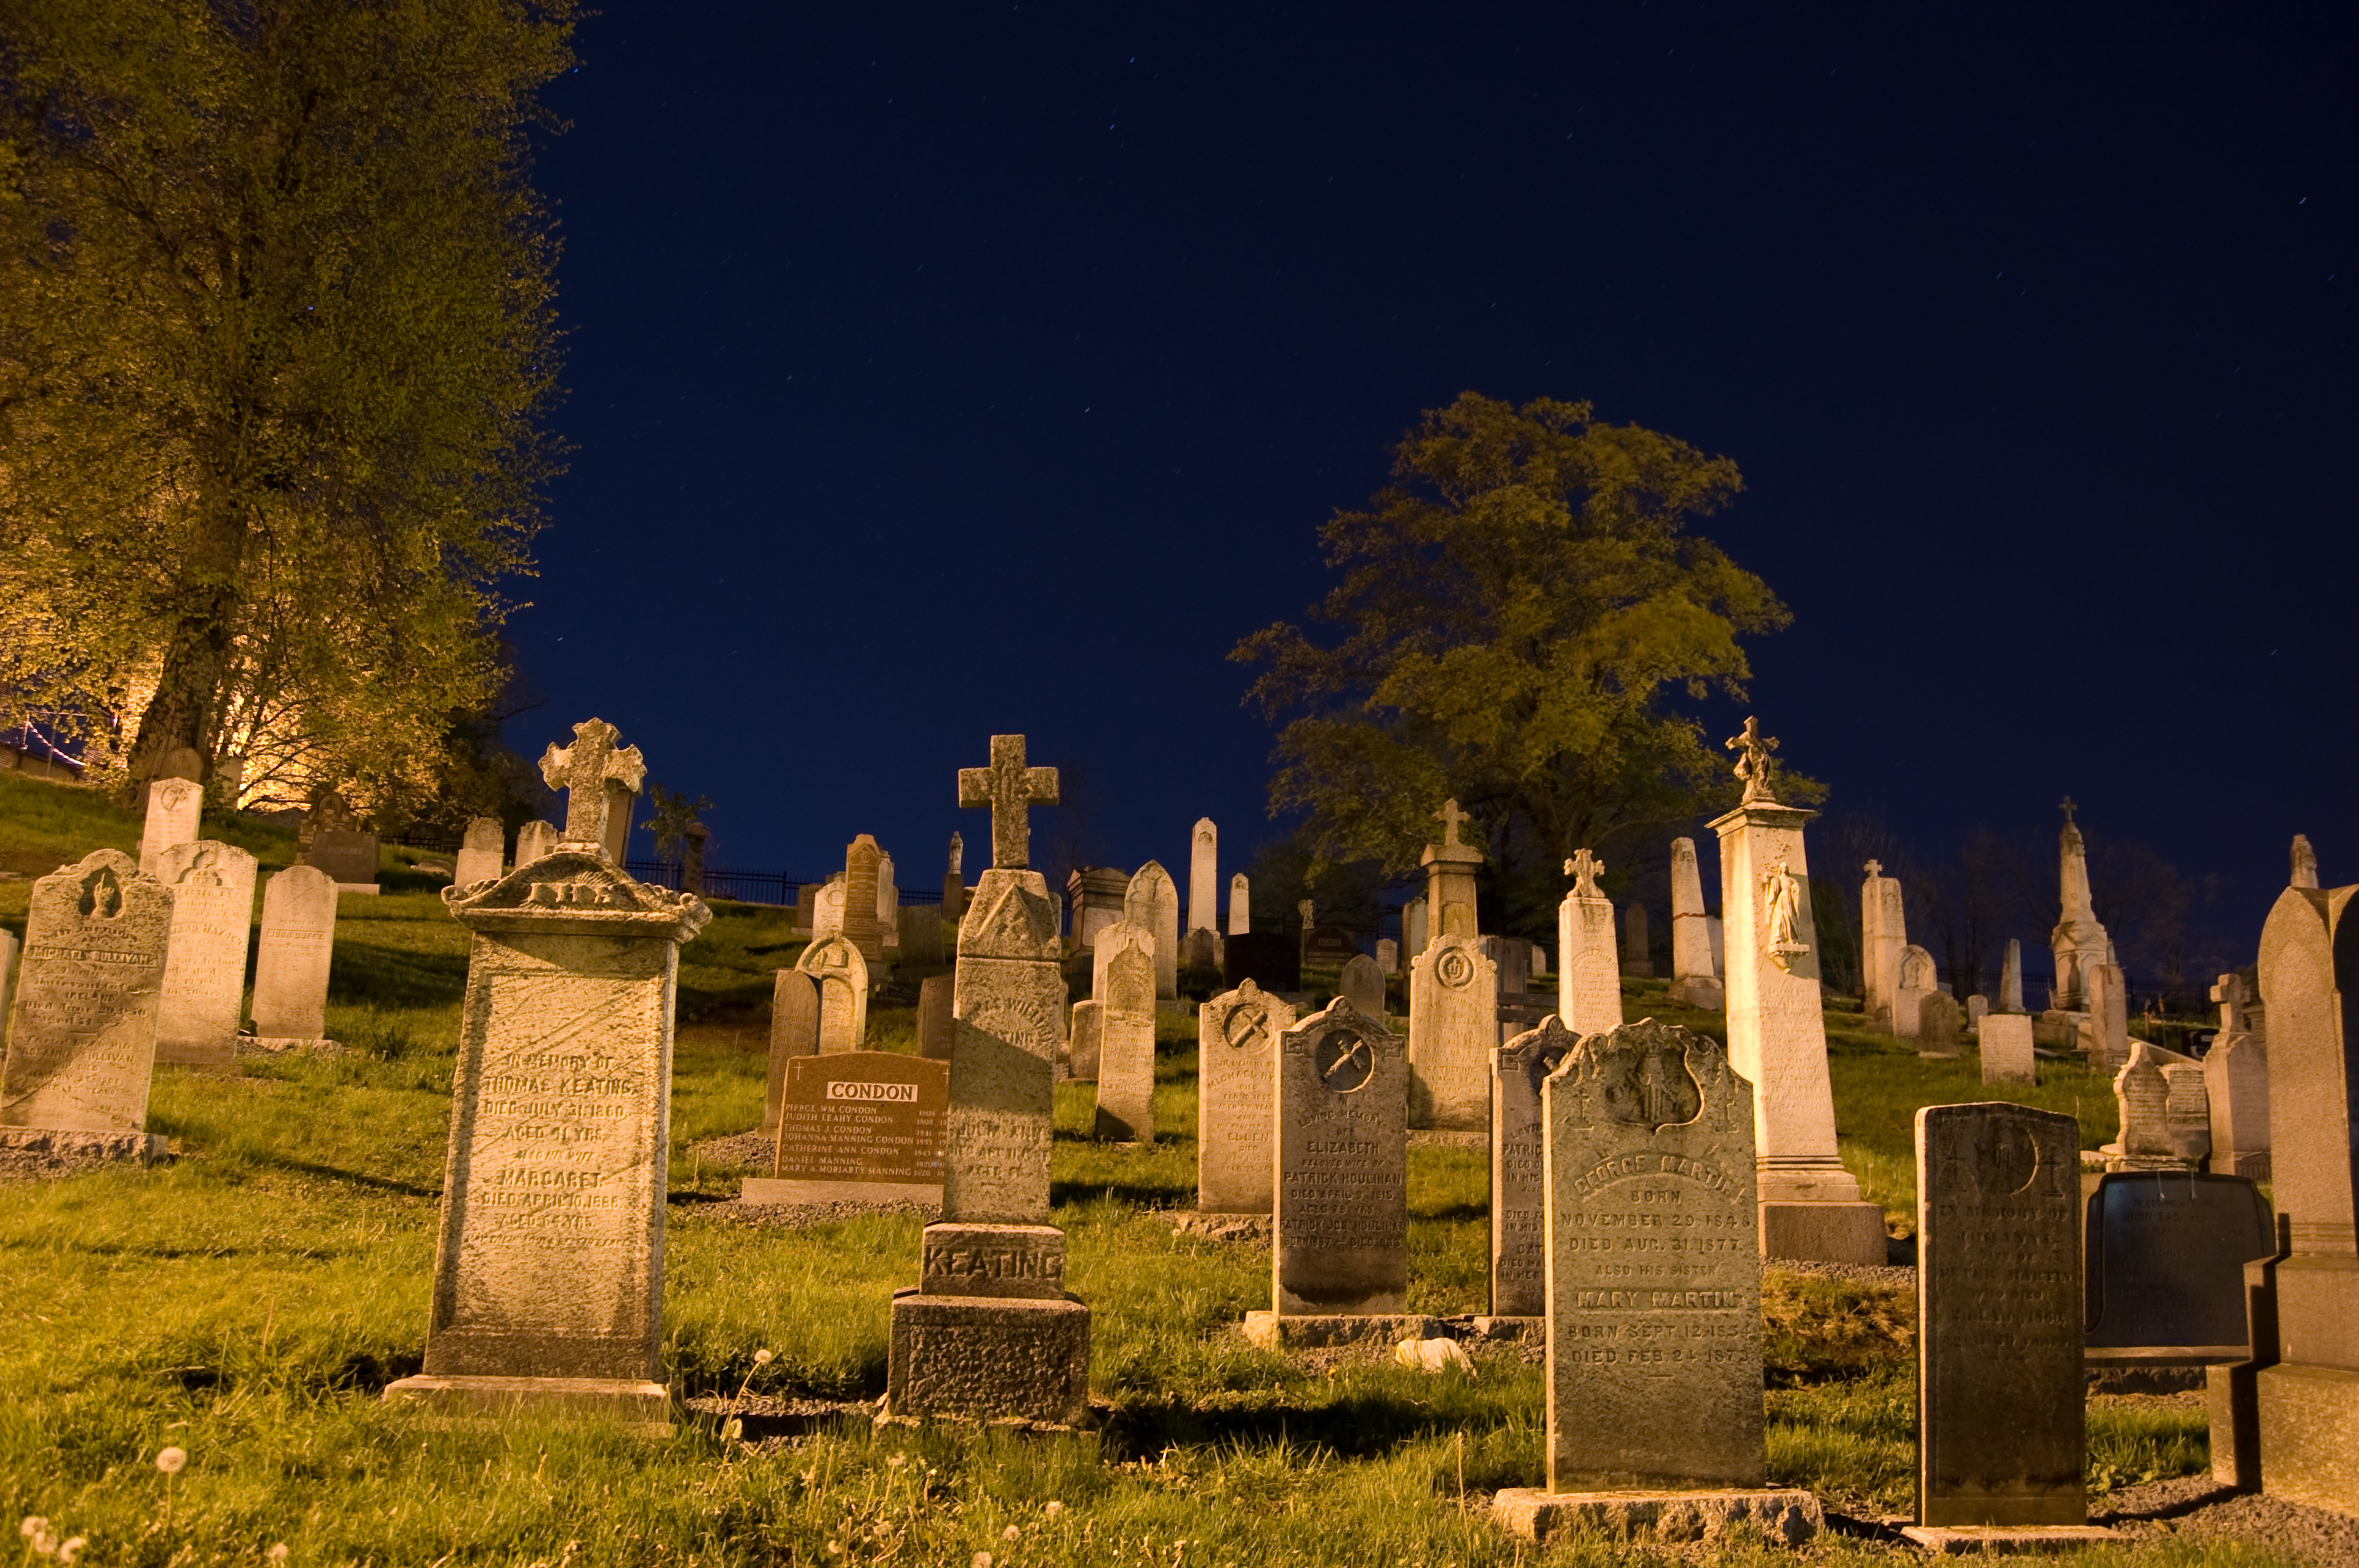 Night Shots in a Graveyard | KeithK